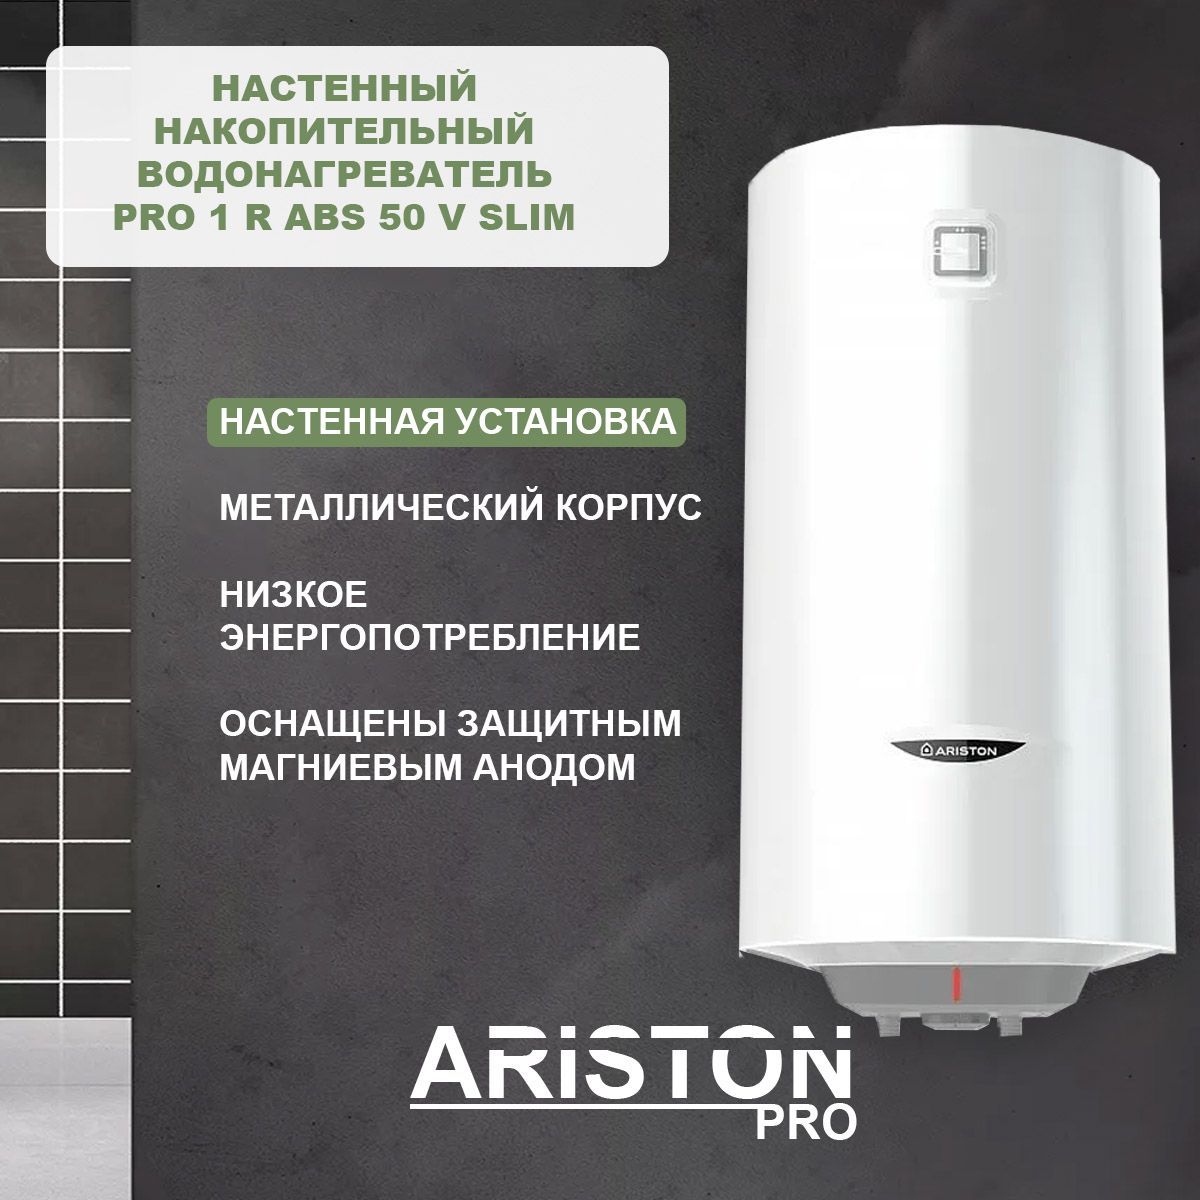 Ariston pro1 r dry